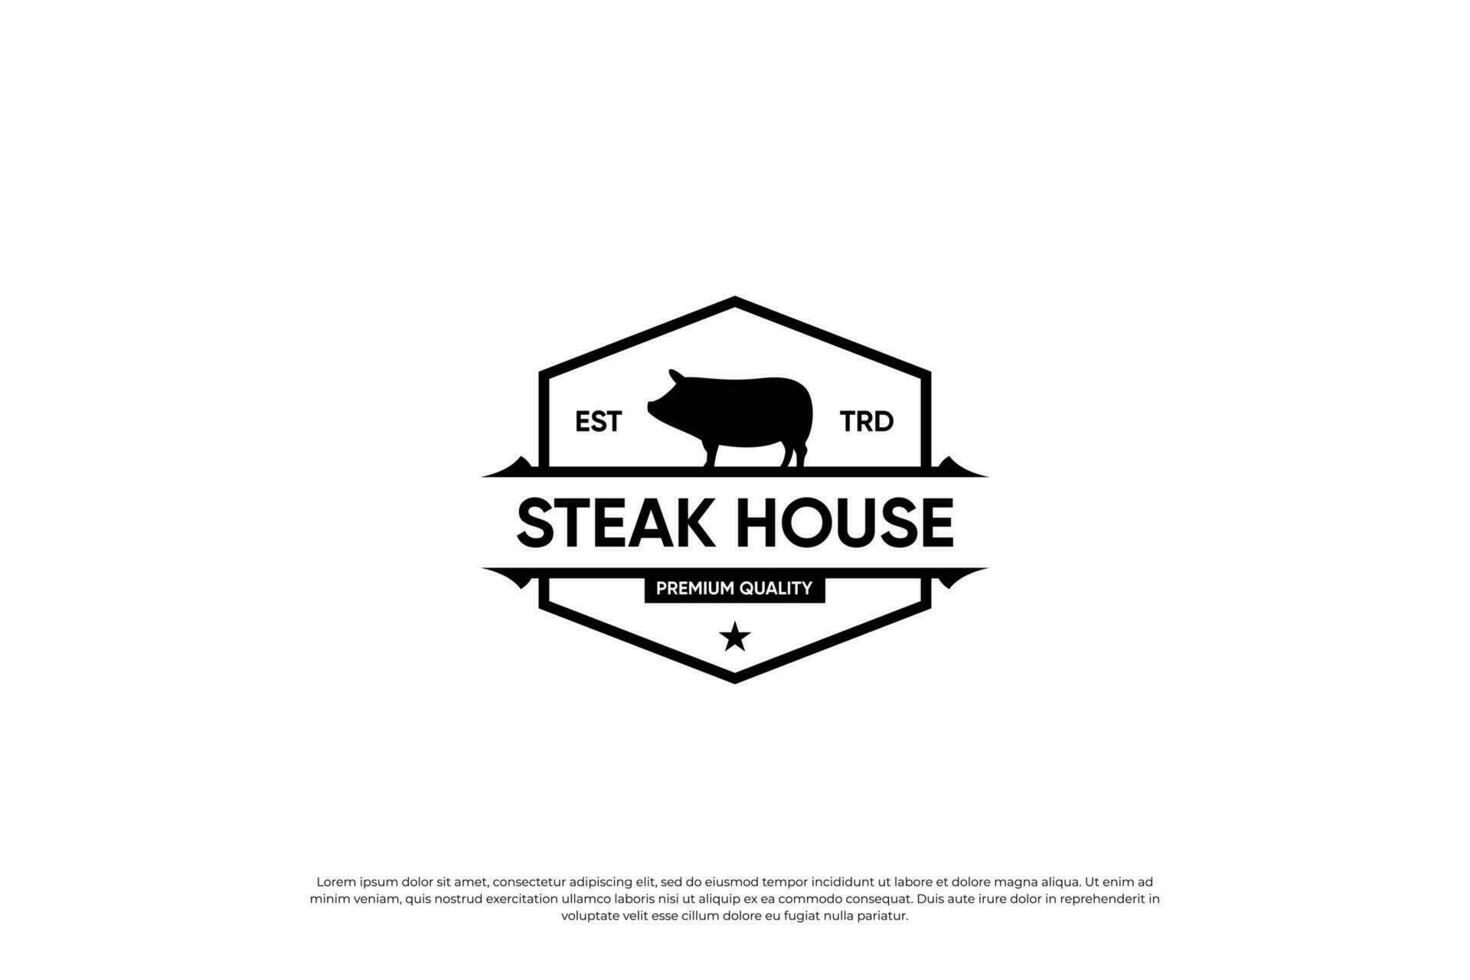 Steak house logo. Grill Restaurant label. Vintage style design. vector